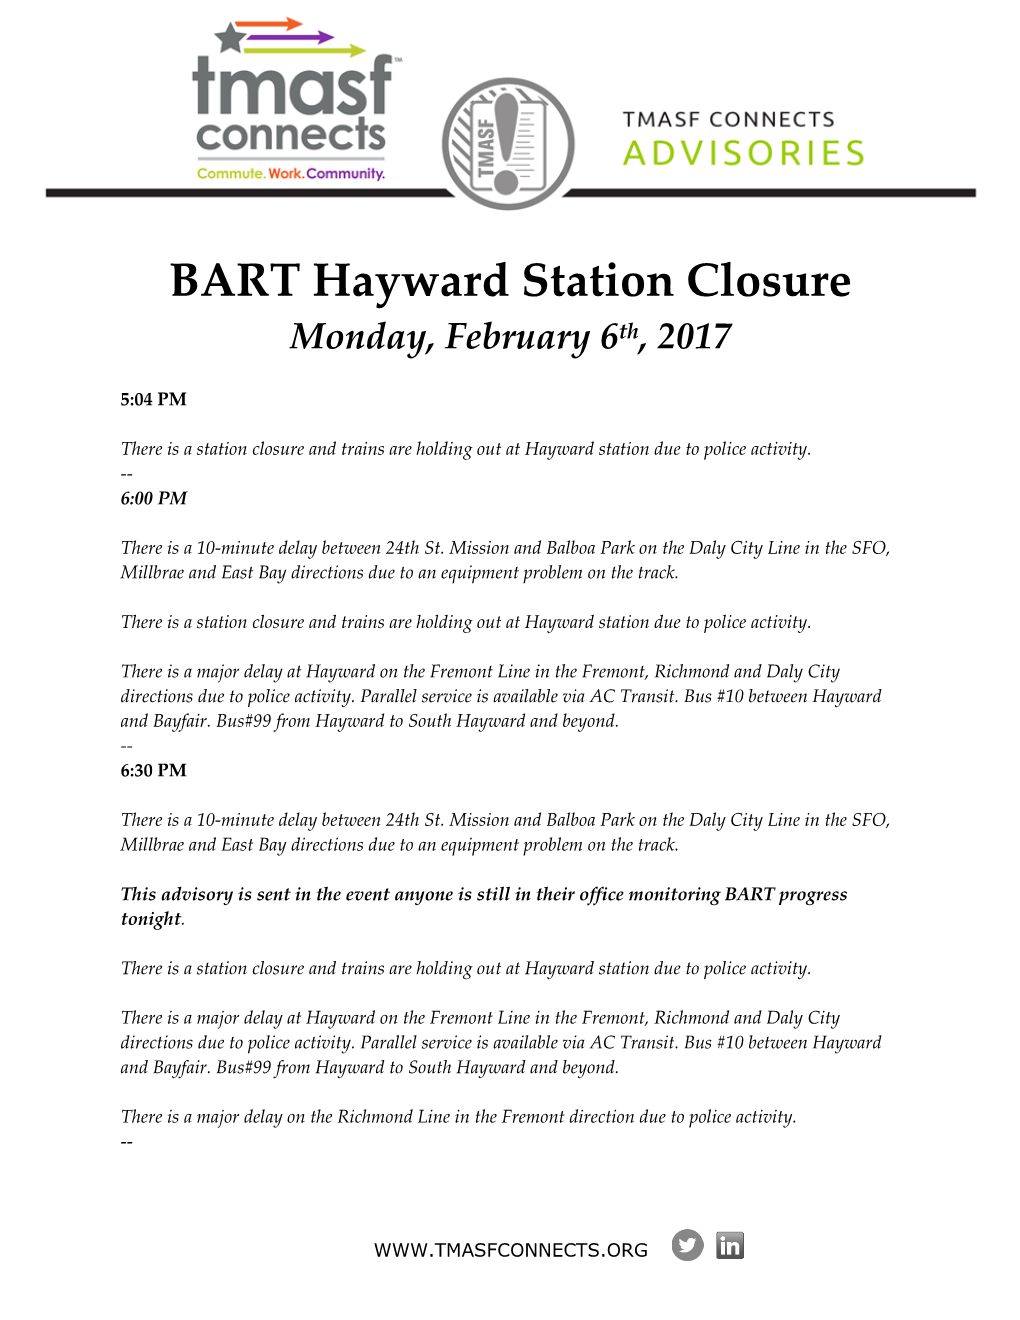 BART Hayward Station Closure Monday, February 6Th, 2017